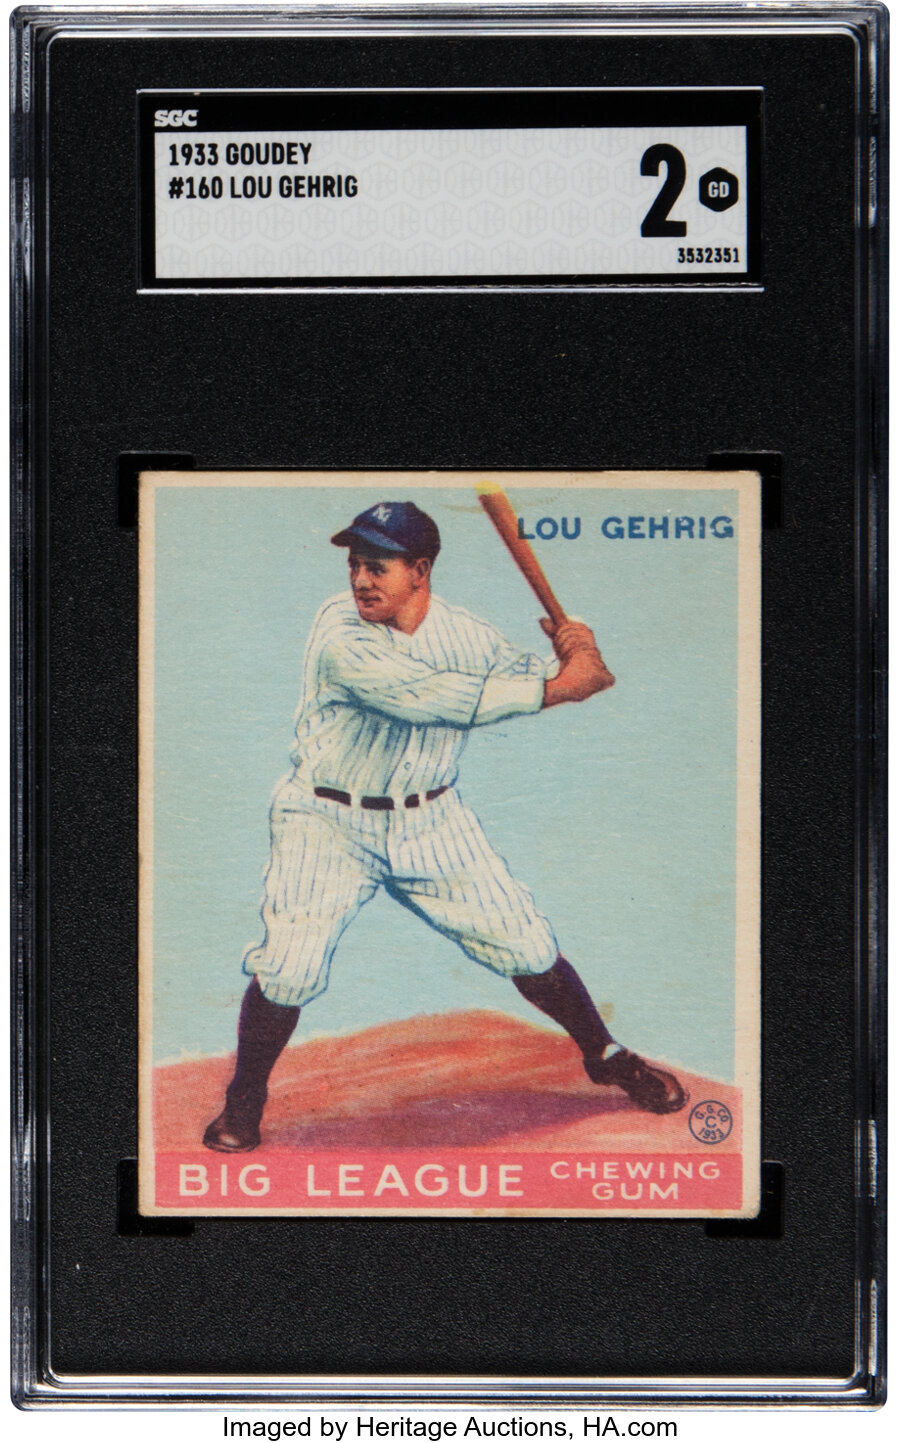 1933 Goudey Lou Gehrig #160 SGC Good 2